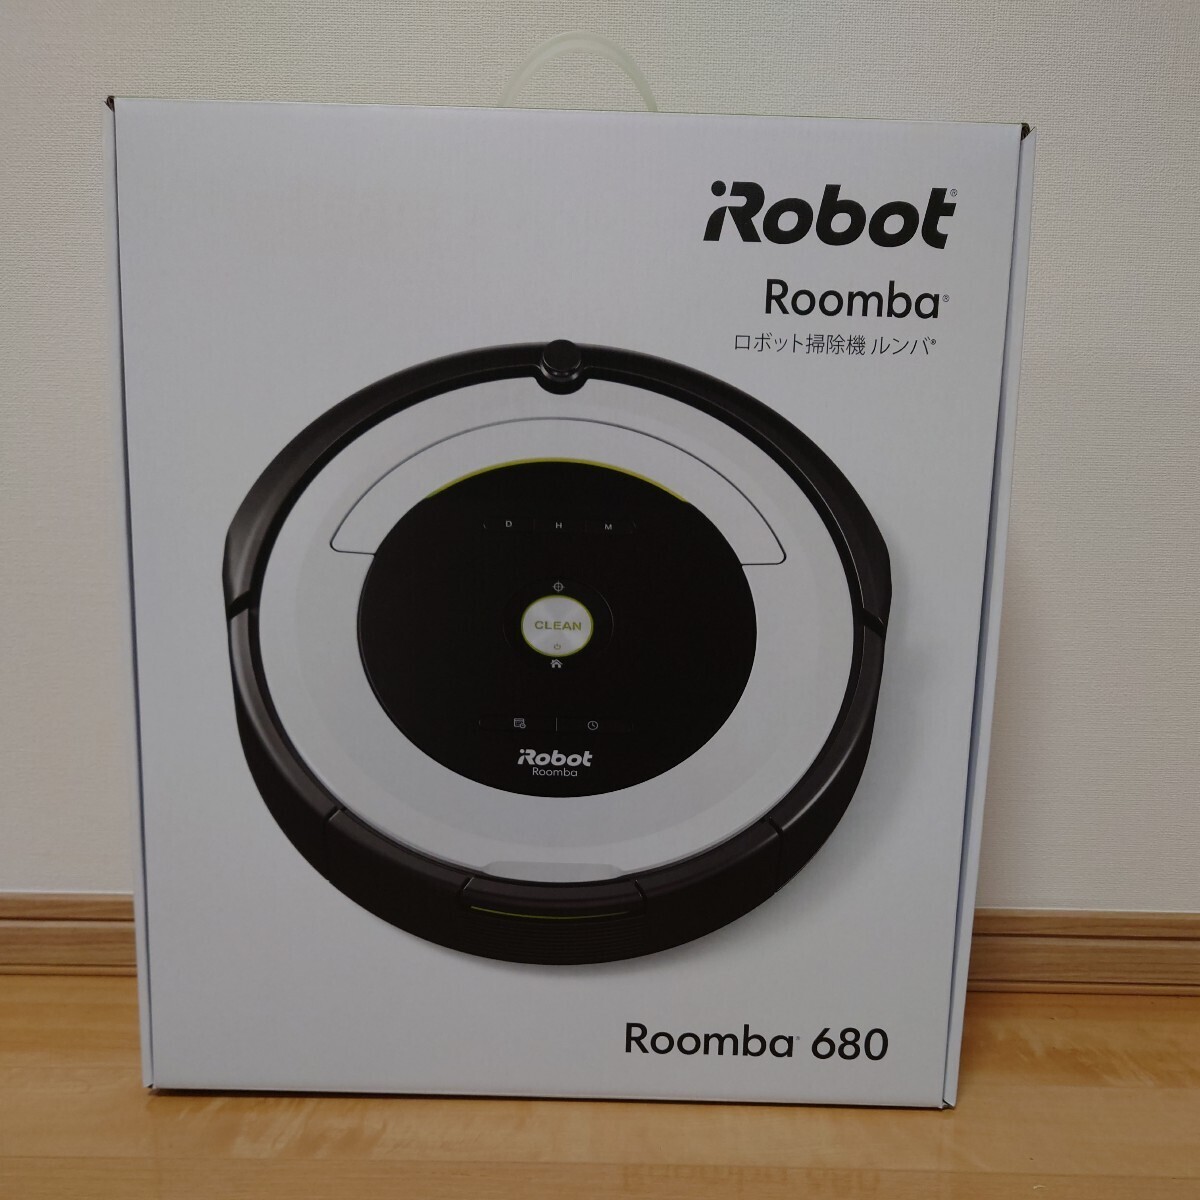  roomba 680 new goods unused unopened iRobot robot vacuum cleaner 